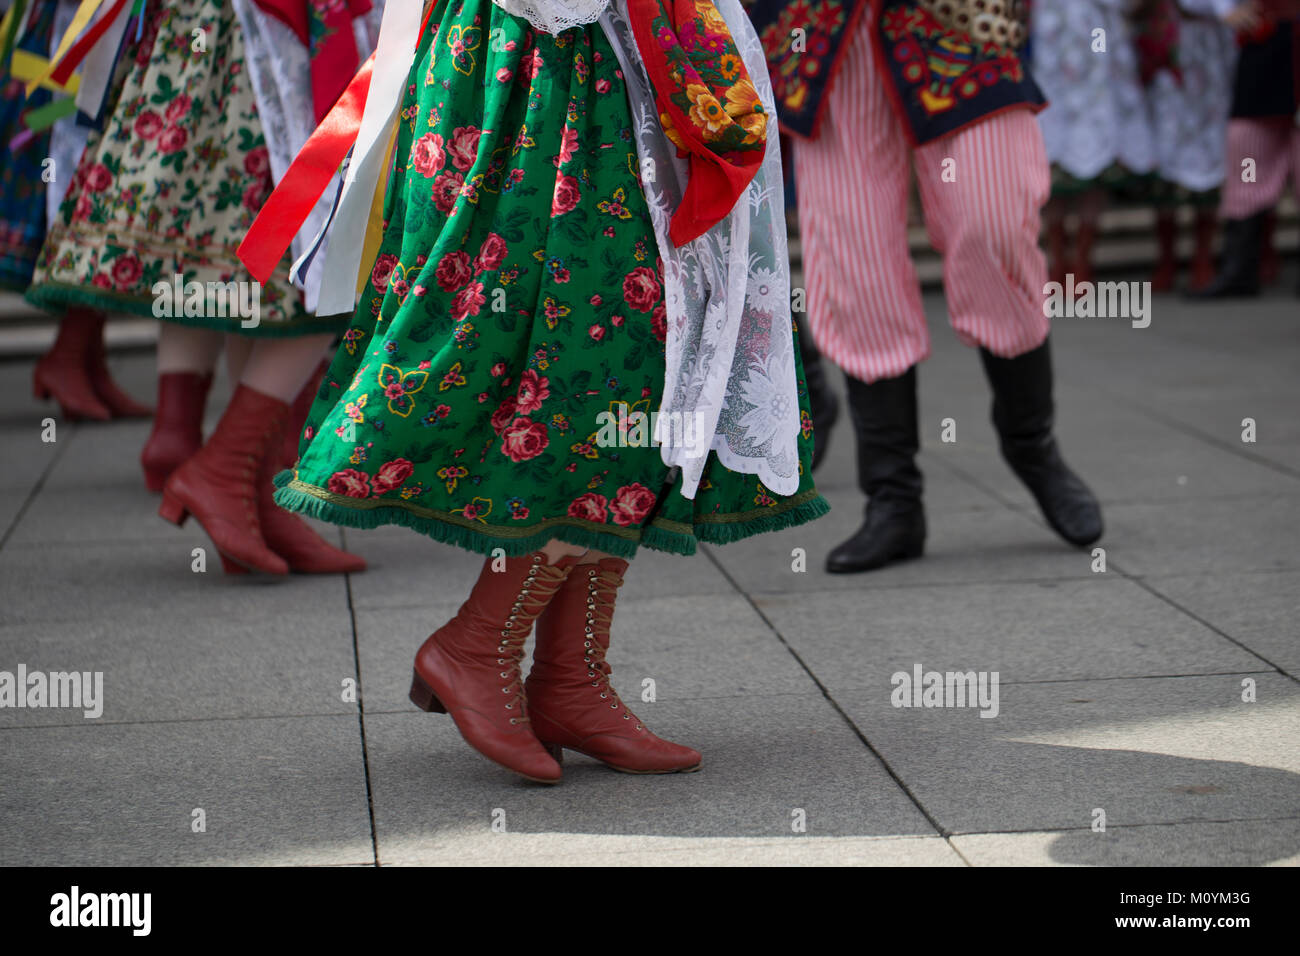 Polish folk dance group with traditional costume Stock Photo